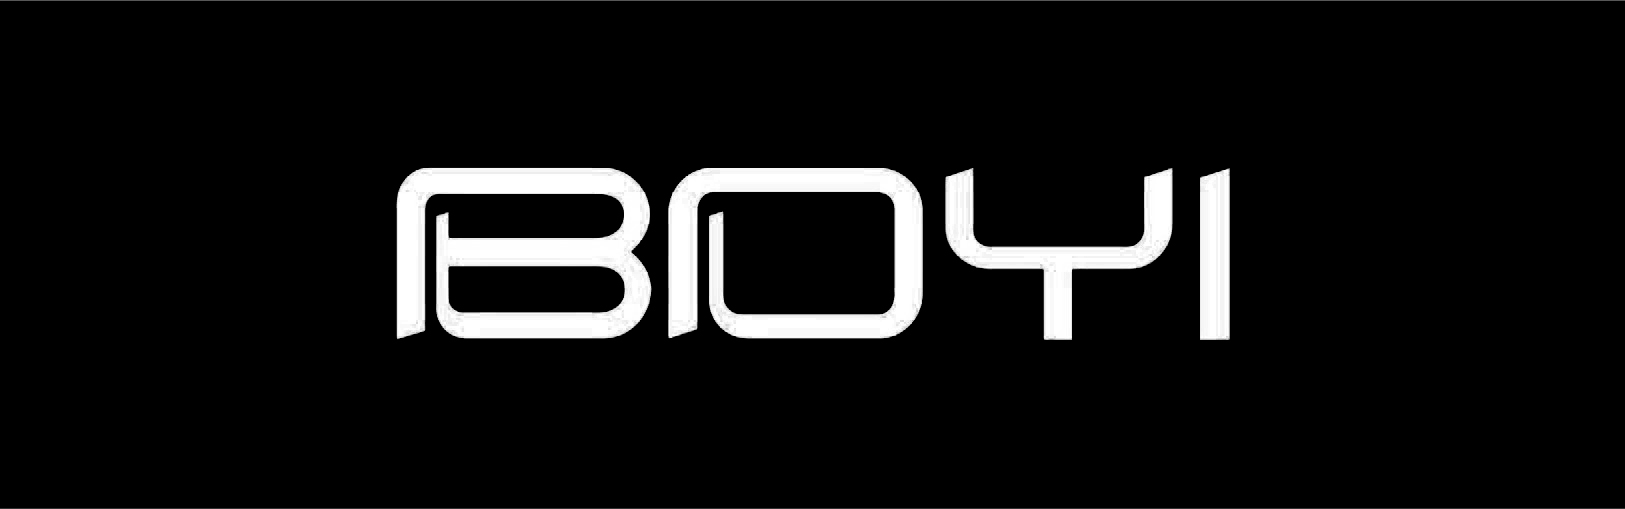 Boyi company logo croped B&W